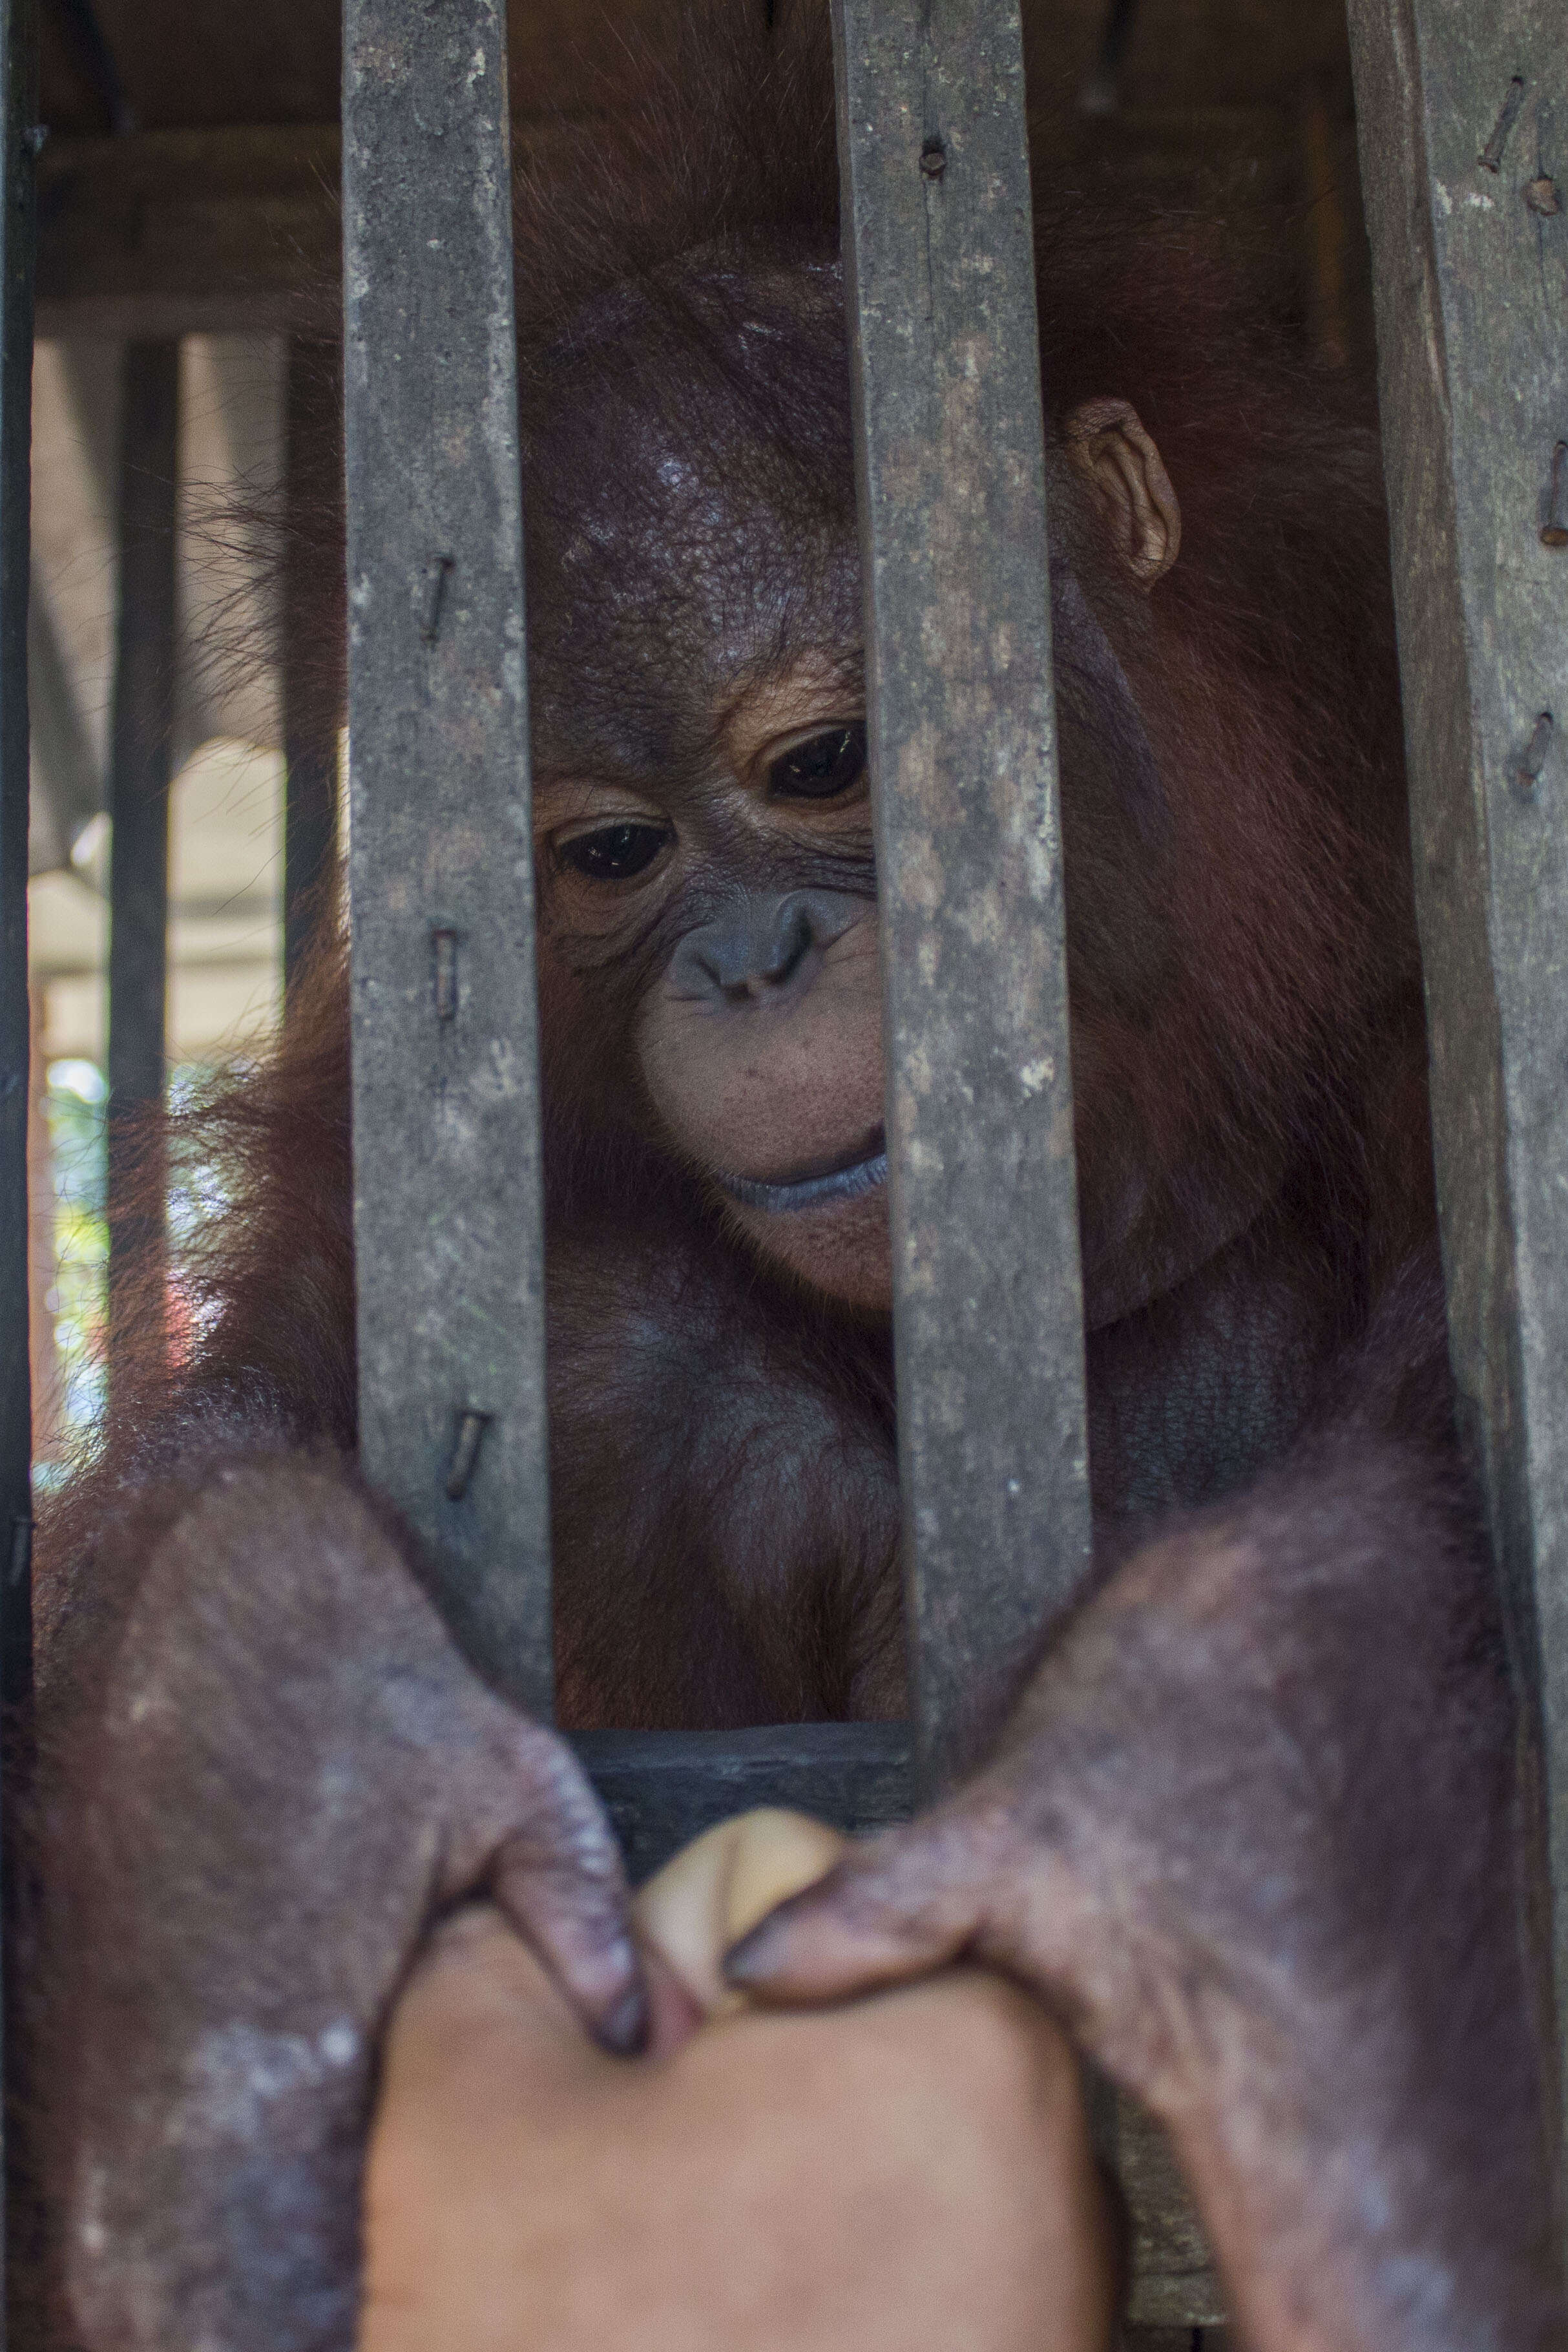 Orangutan grabbing someone's hand